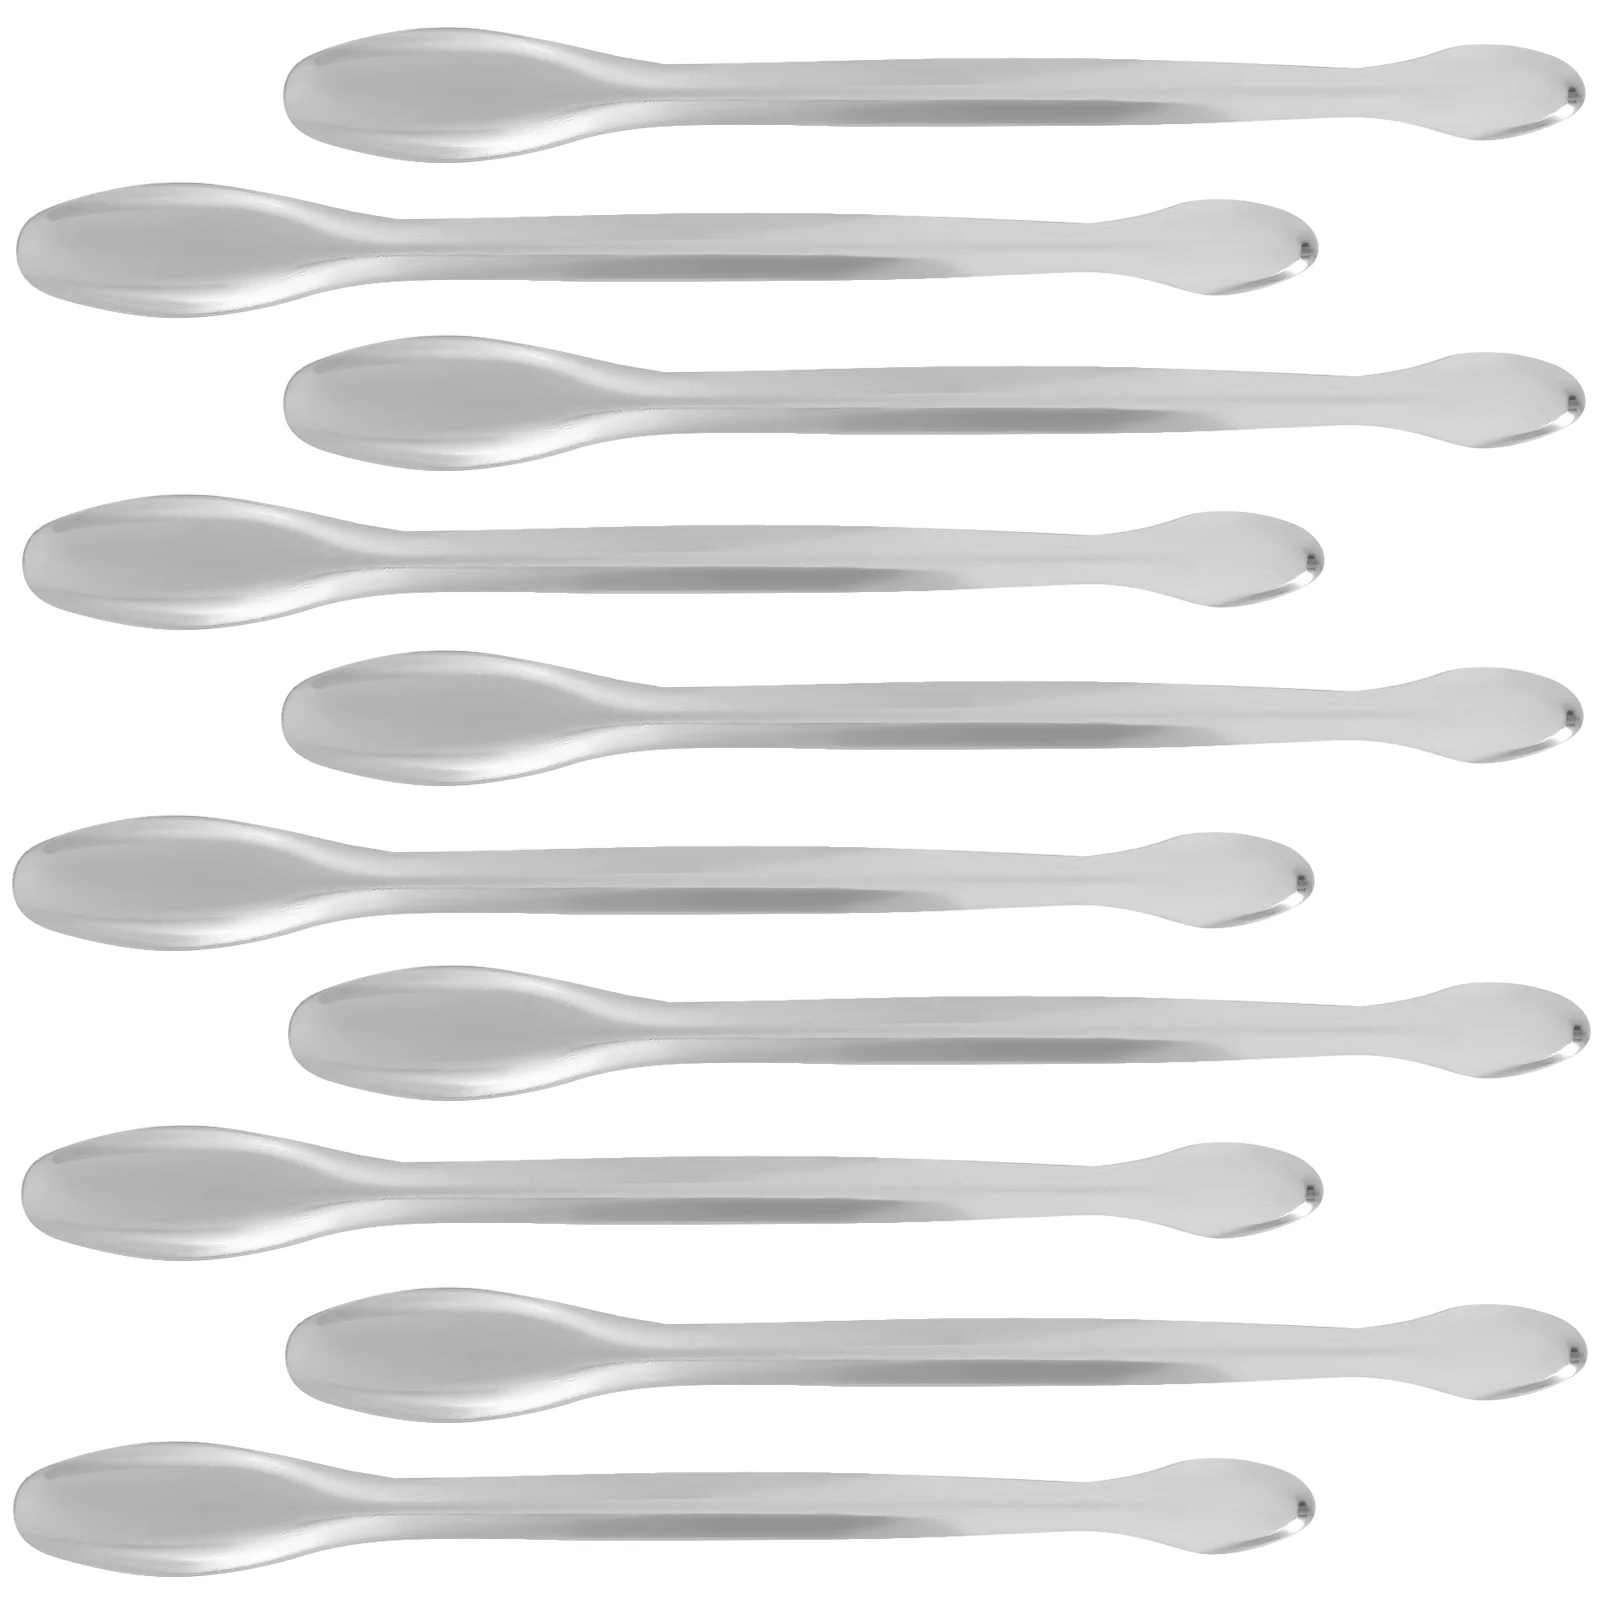 

10 Pcs Sampling Spoons Experiment Scoop Mini Medicine Double-head Laboratory Stainless Steel